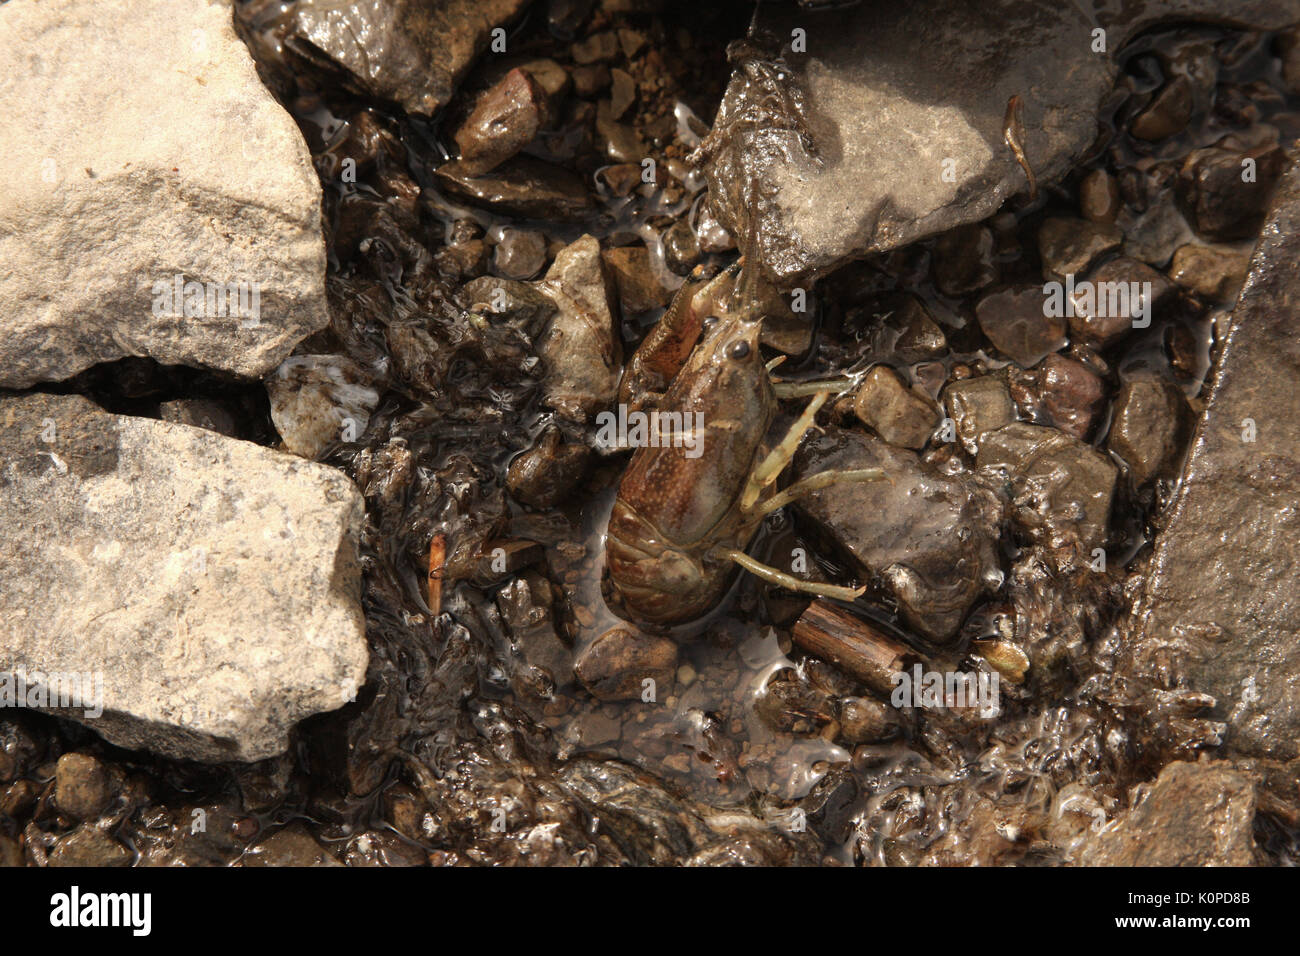 Crayfish in stream water Stock Photo